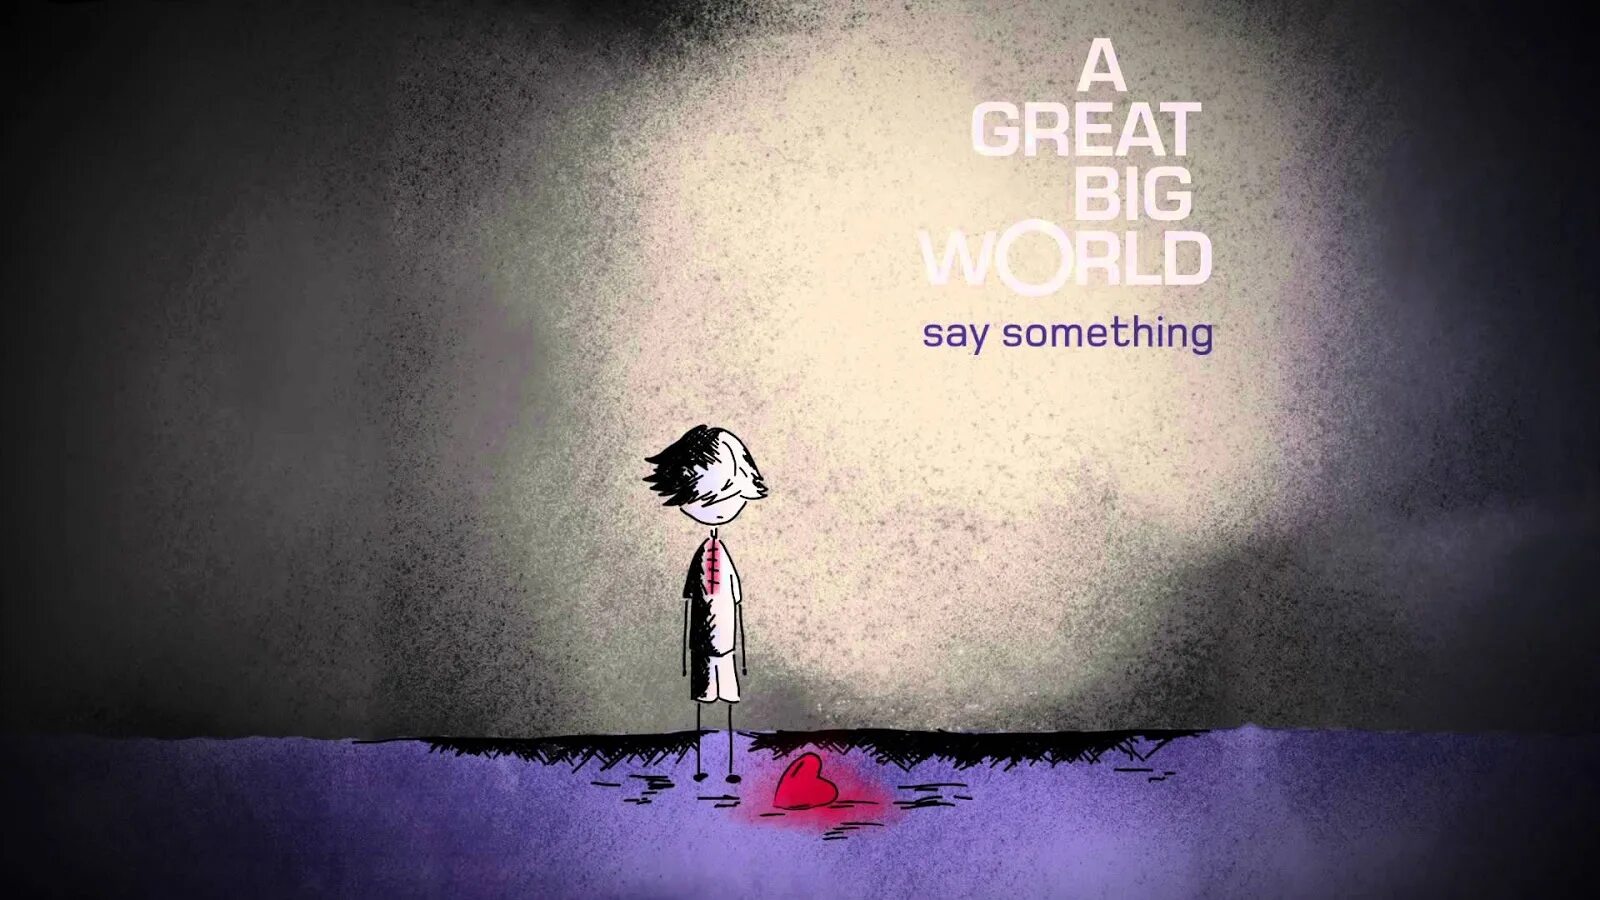 Say something!. Big World. Say something a great big World текст. A great big World.